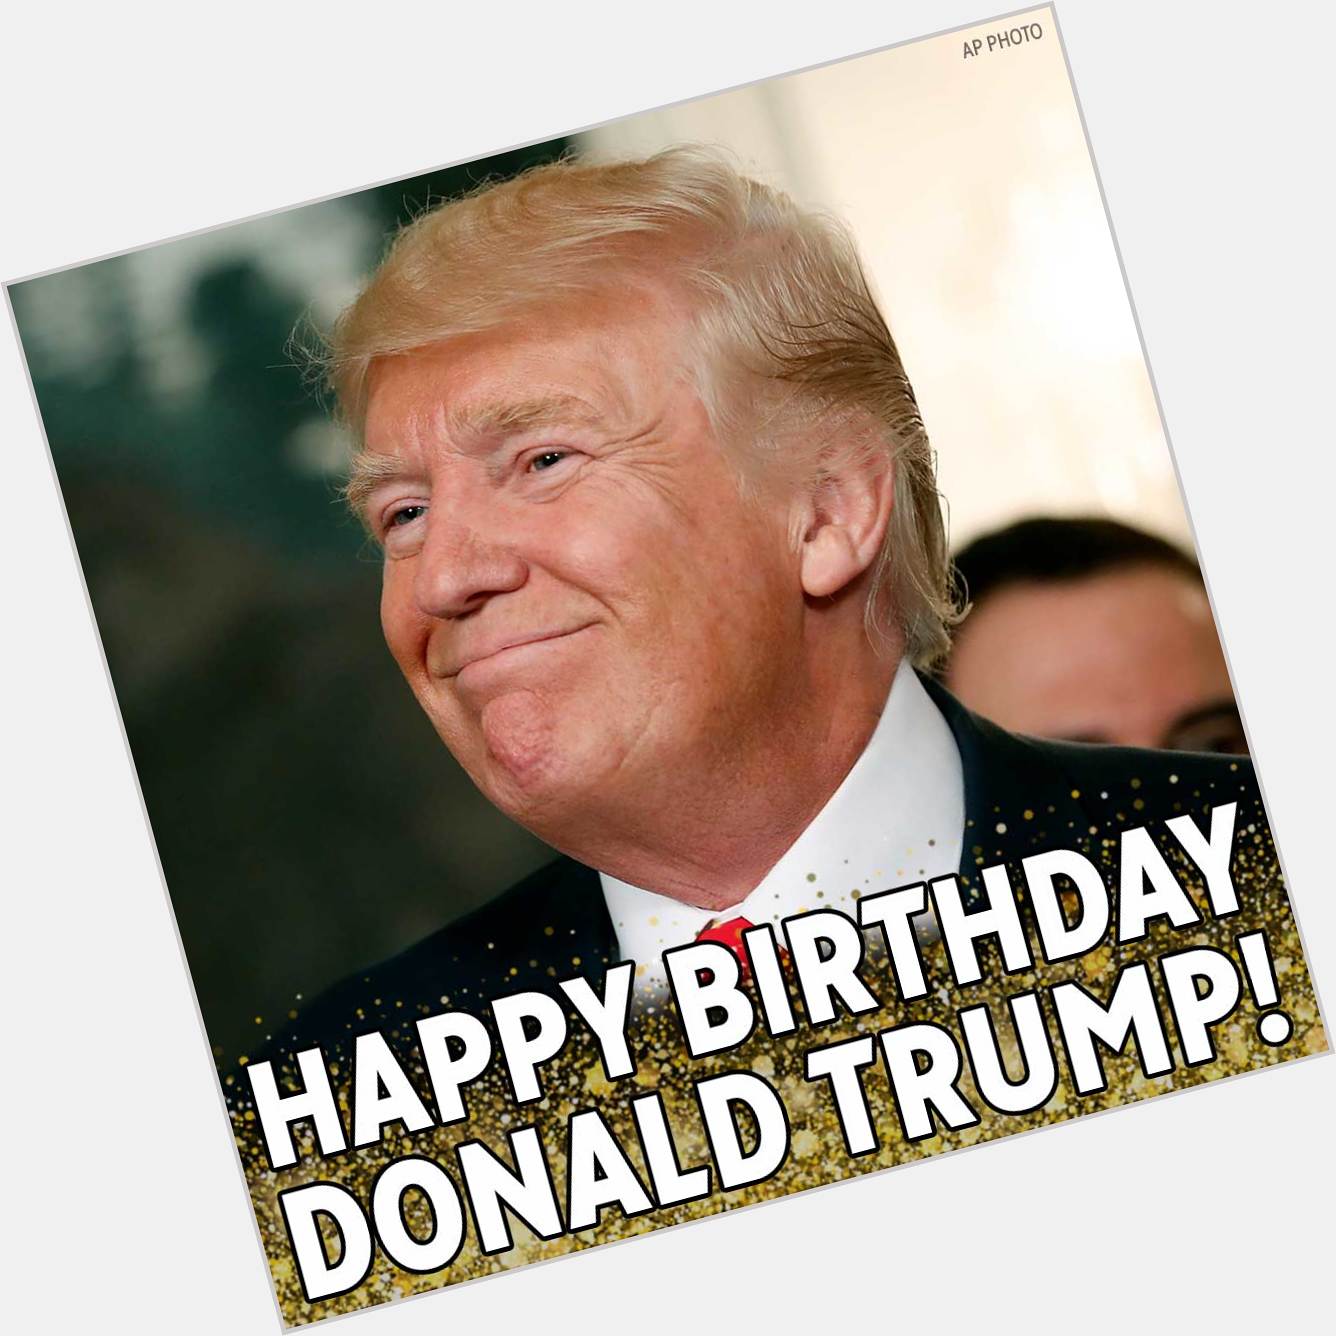 Happy birthday to President Donald Trump! 